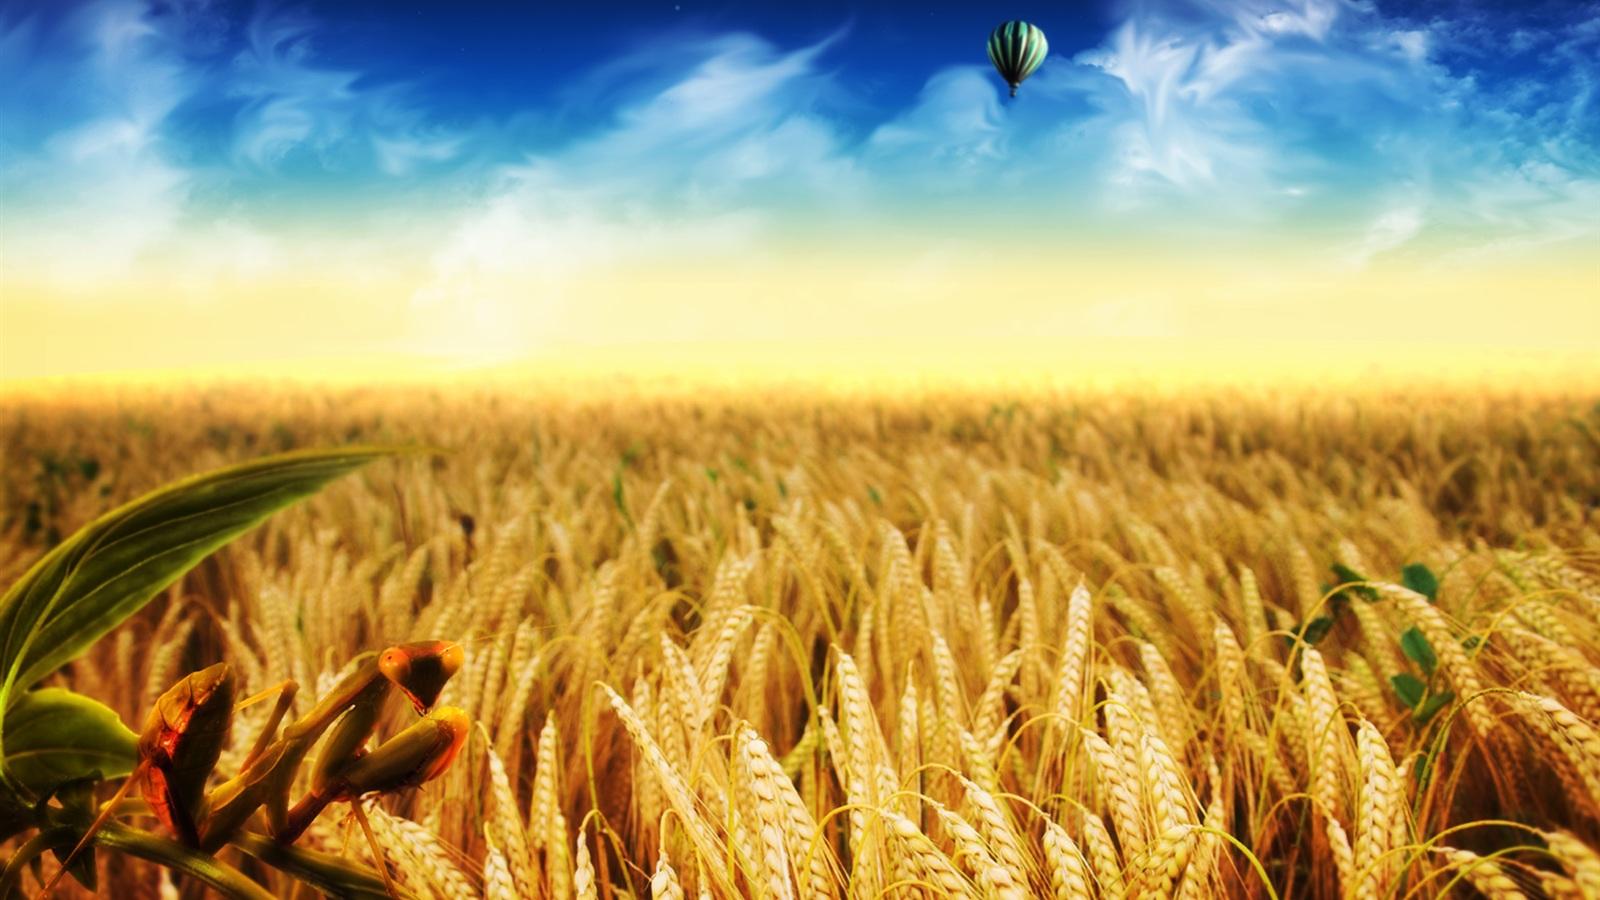 Golden Wheat Field HD Wallpaper, Background Image